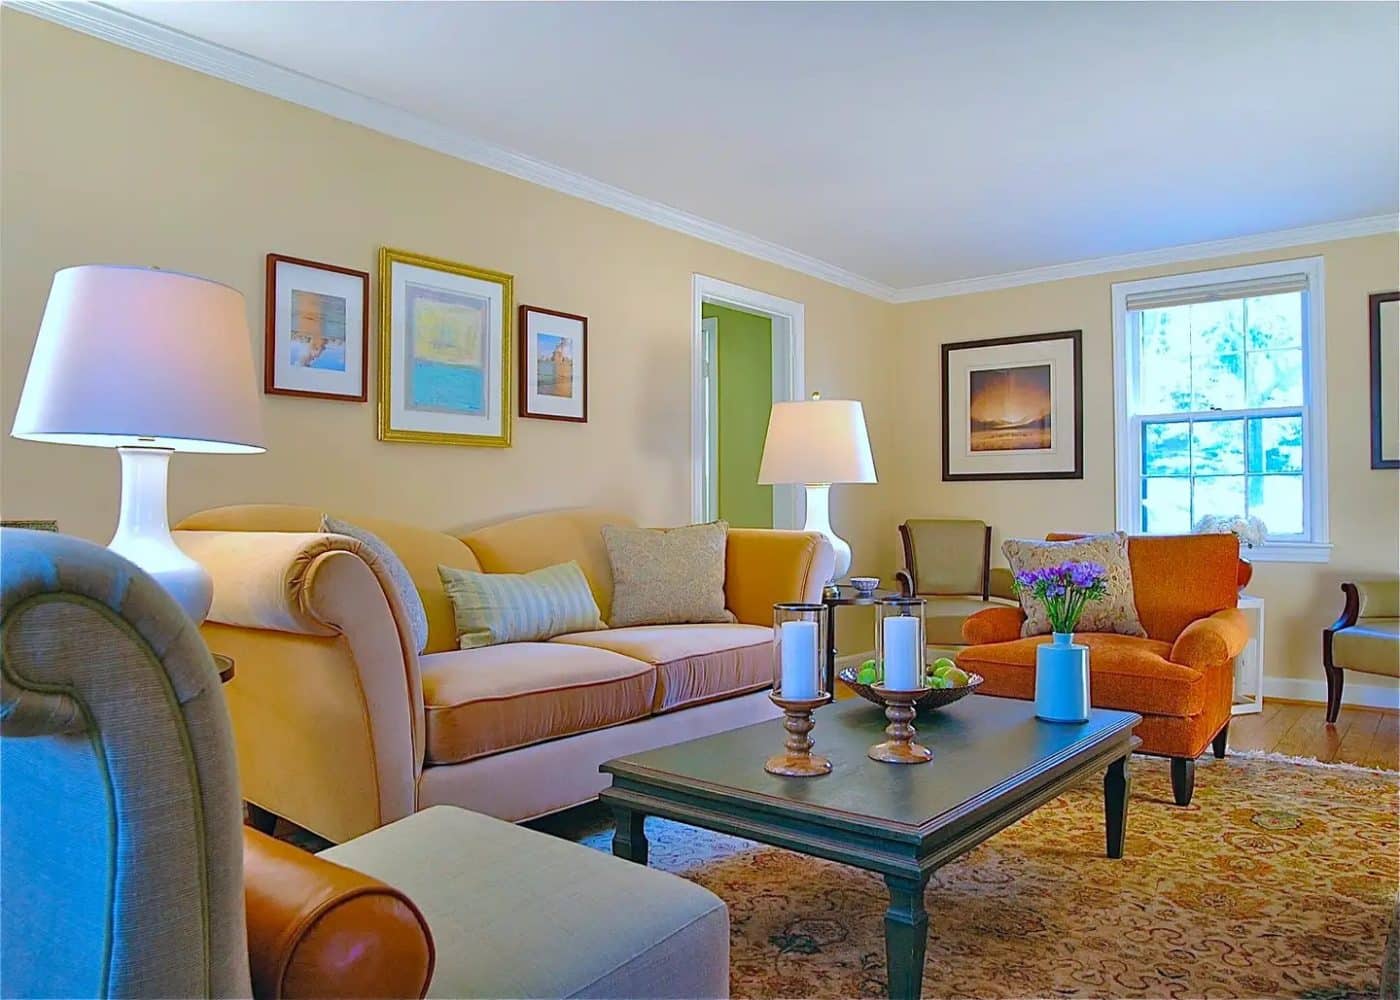 Washington, D.C., living room designed by Keita Turner